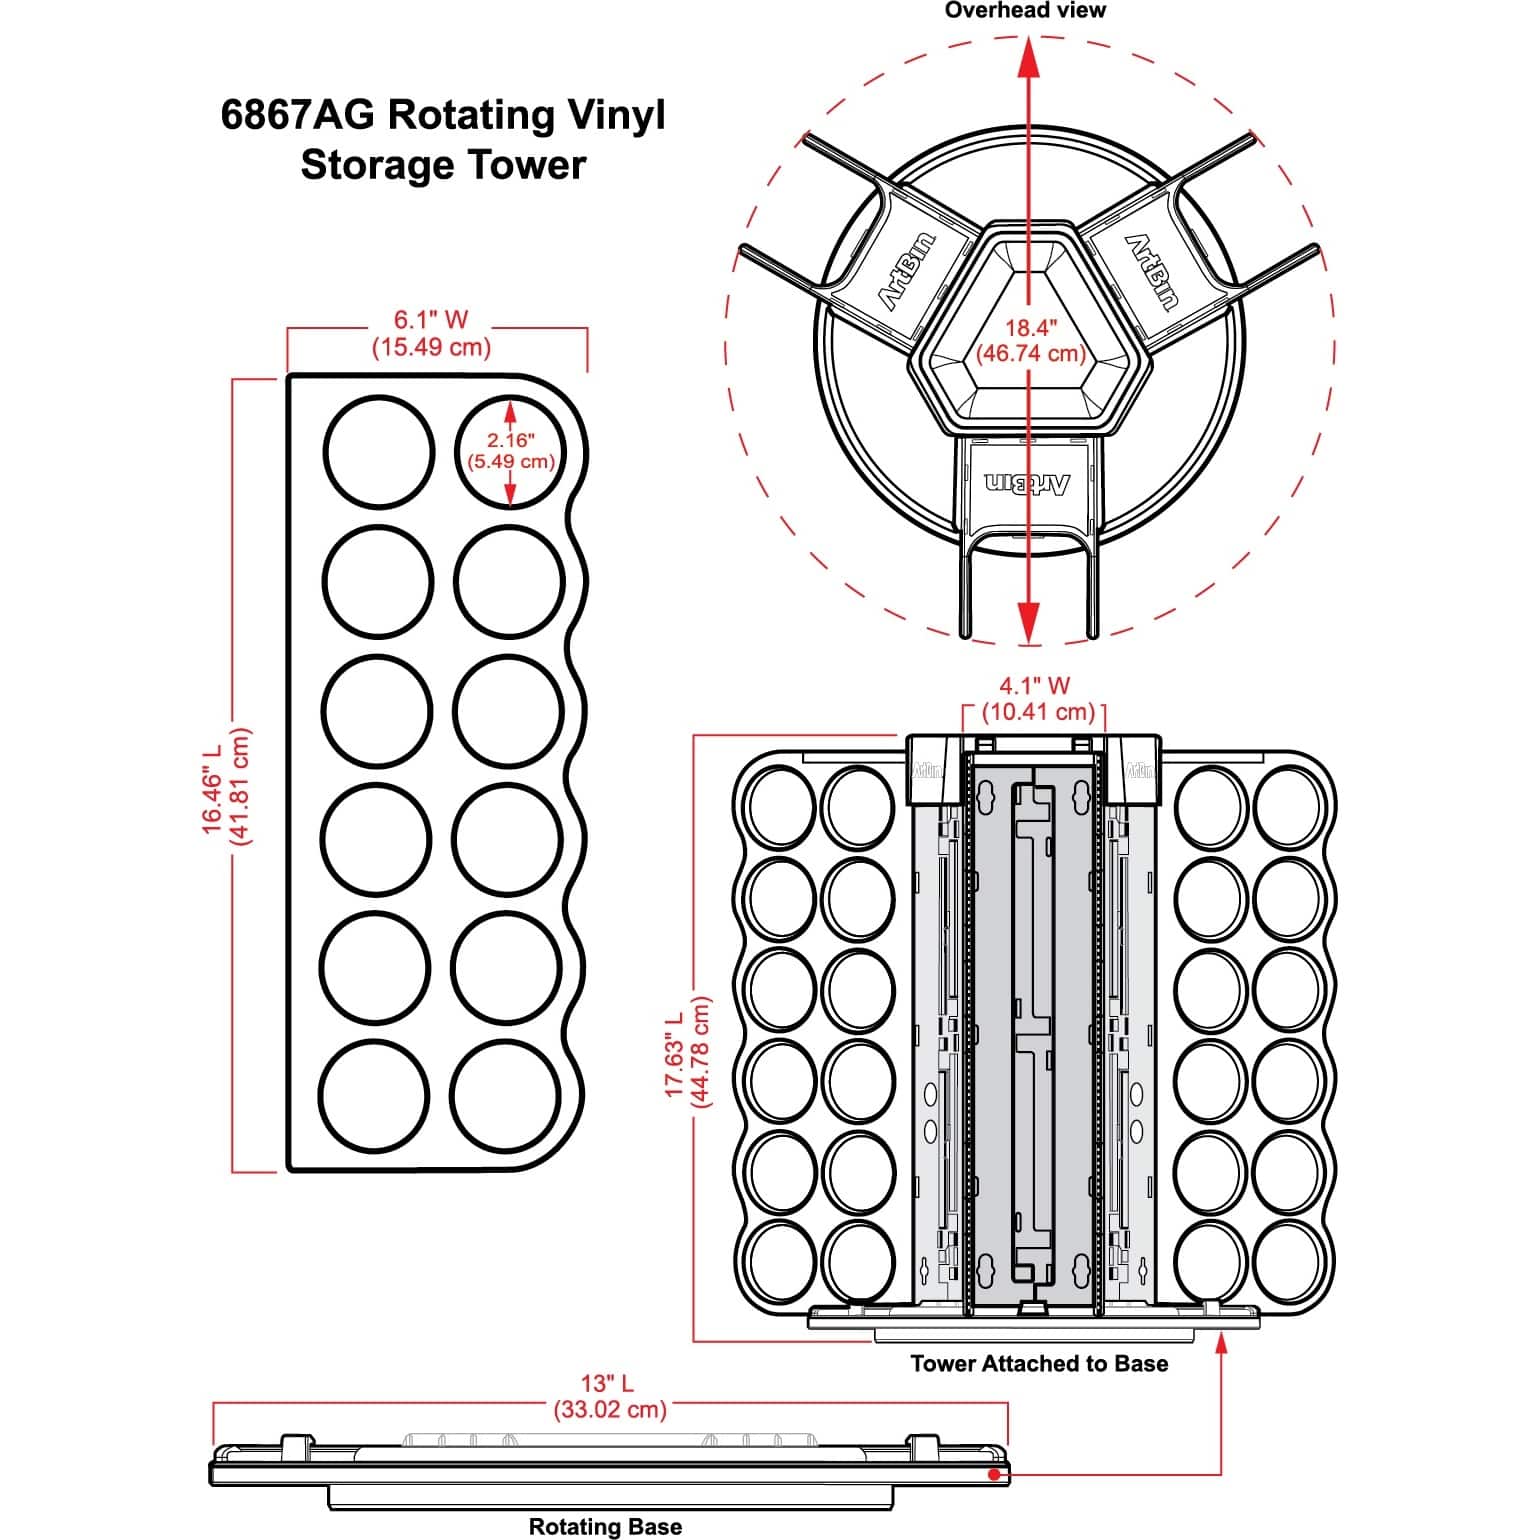 ArtBin&#xAE; Rotating Vinyl Storage Tower